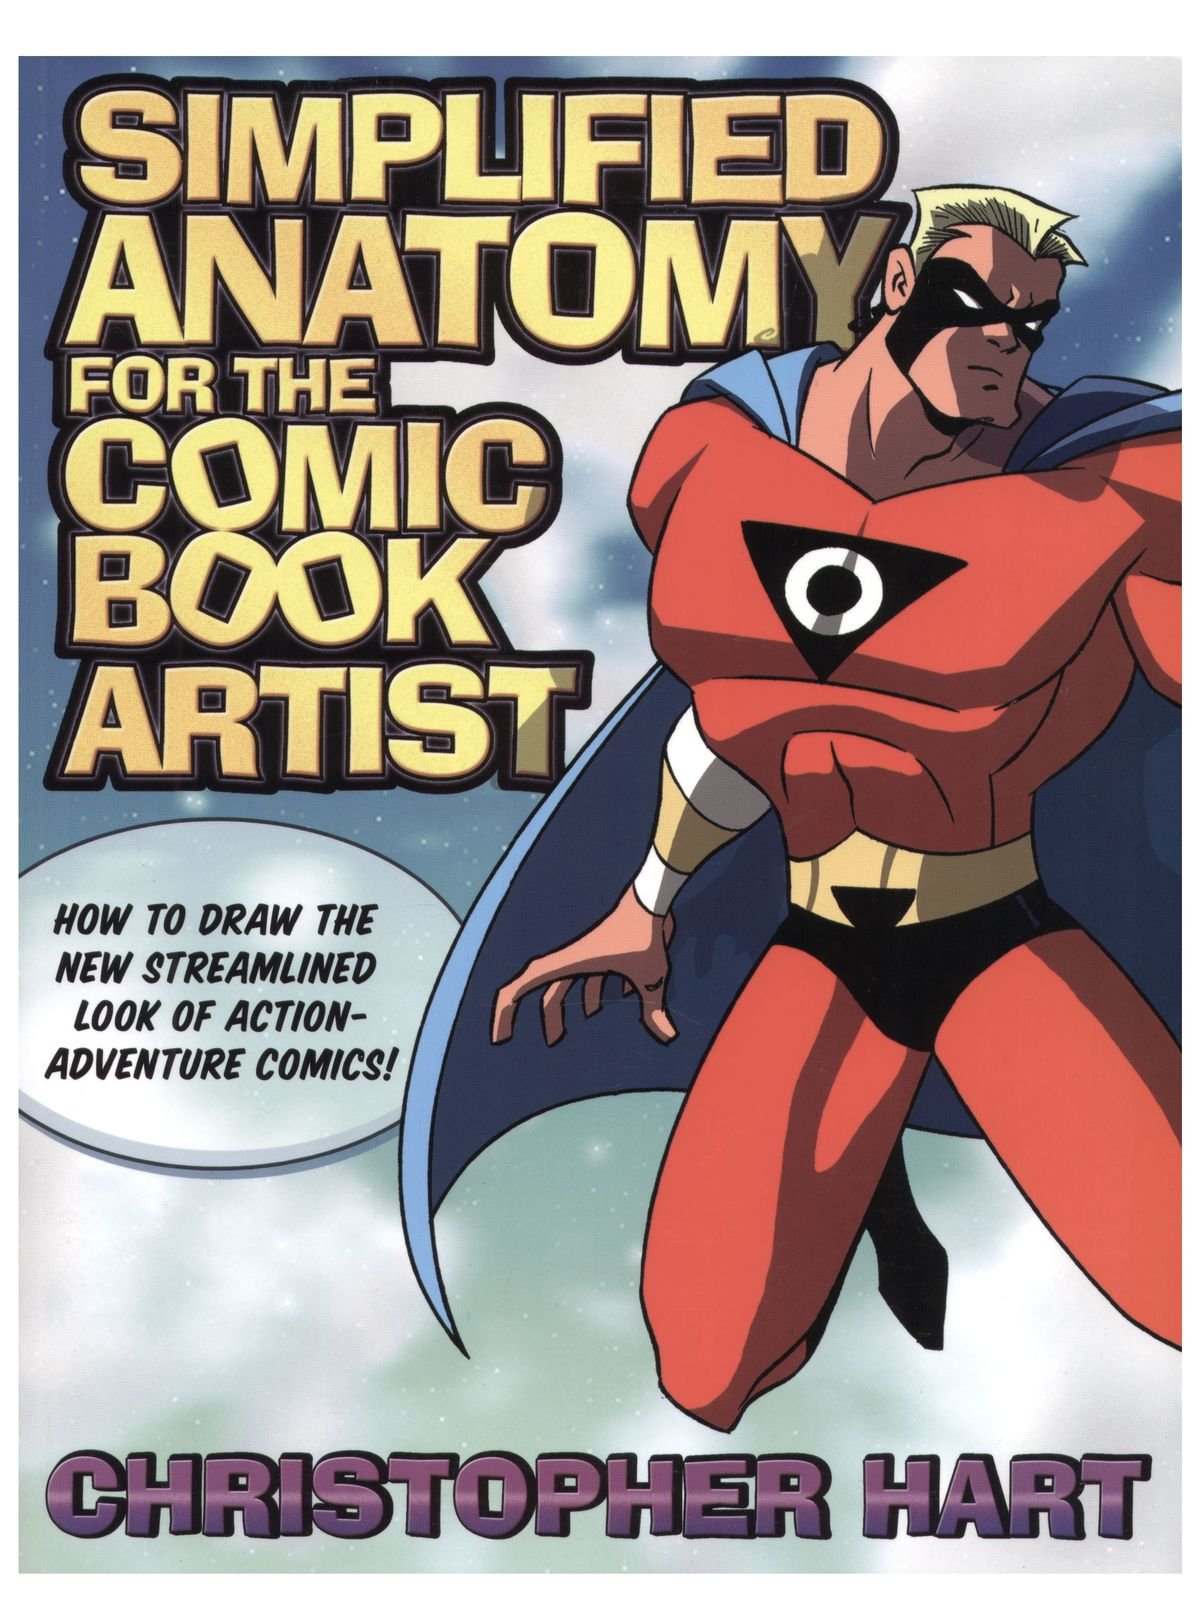 Watson-Guptill - Simplified Anatomy for the Comic Book Artist